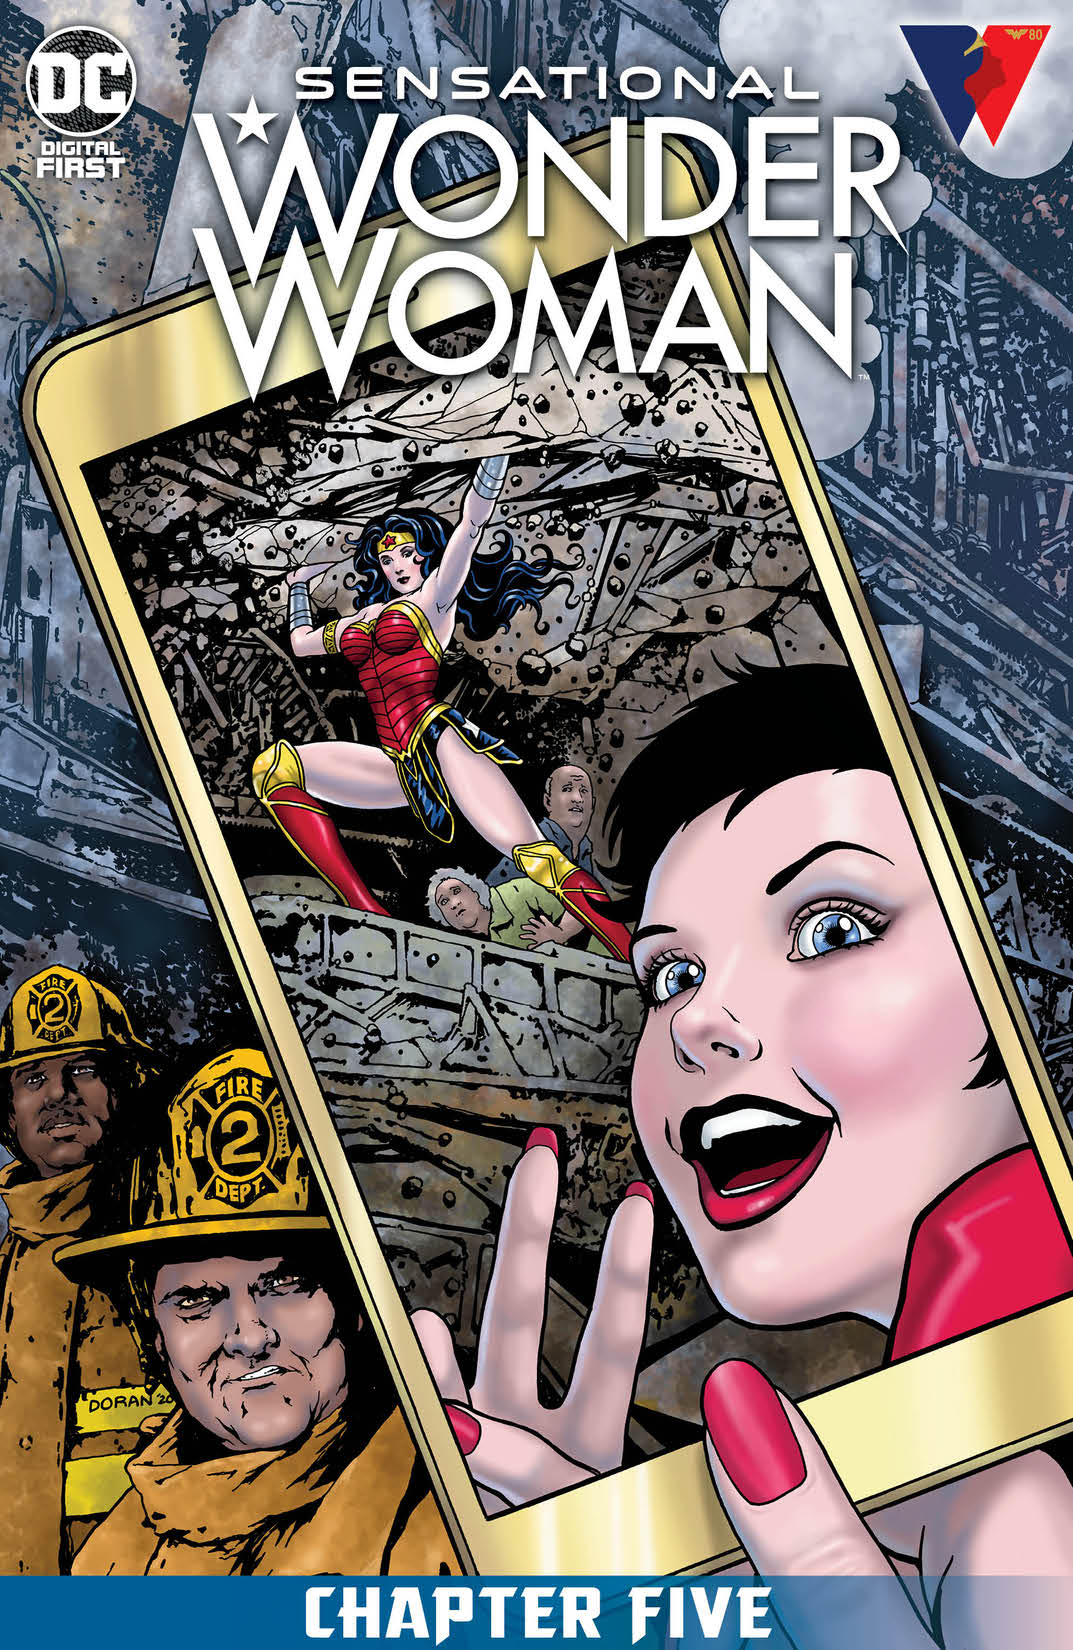 Sensational Wonder Woman #5 preview images